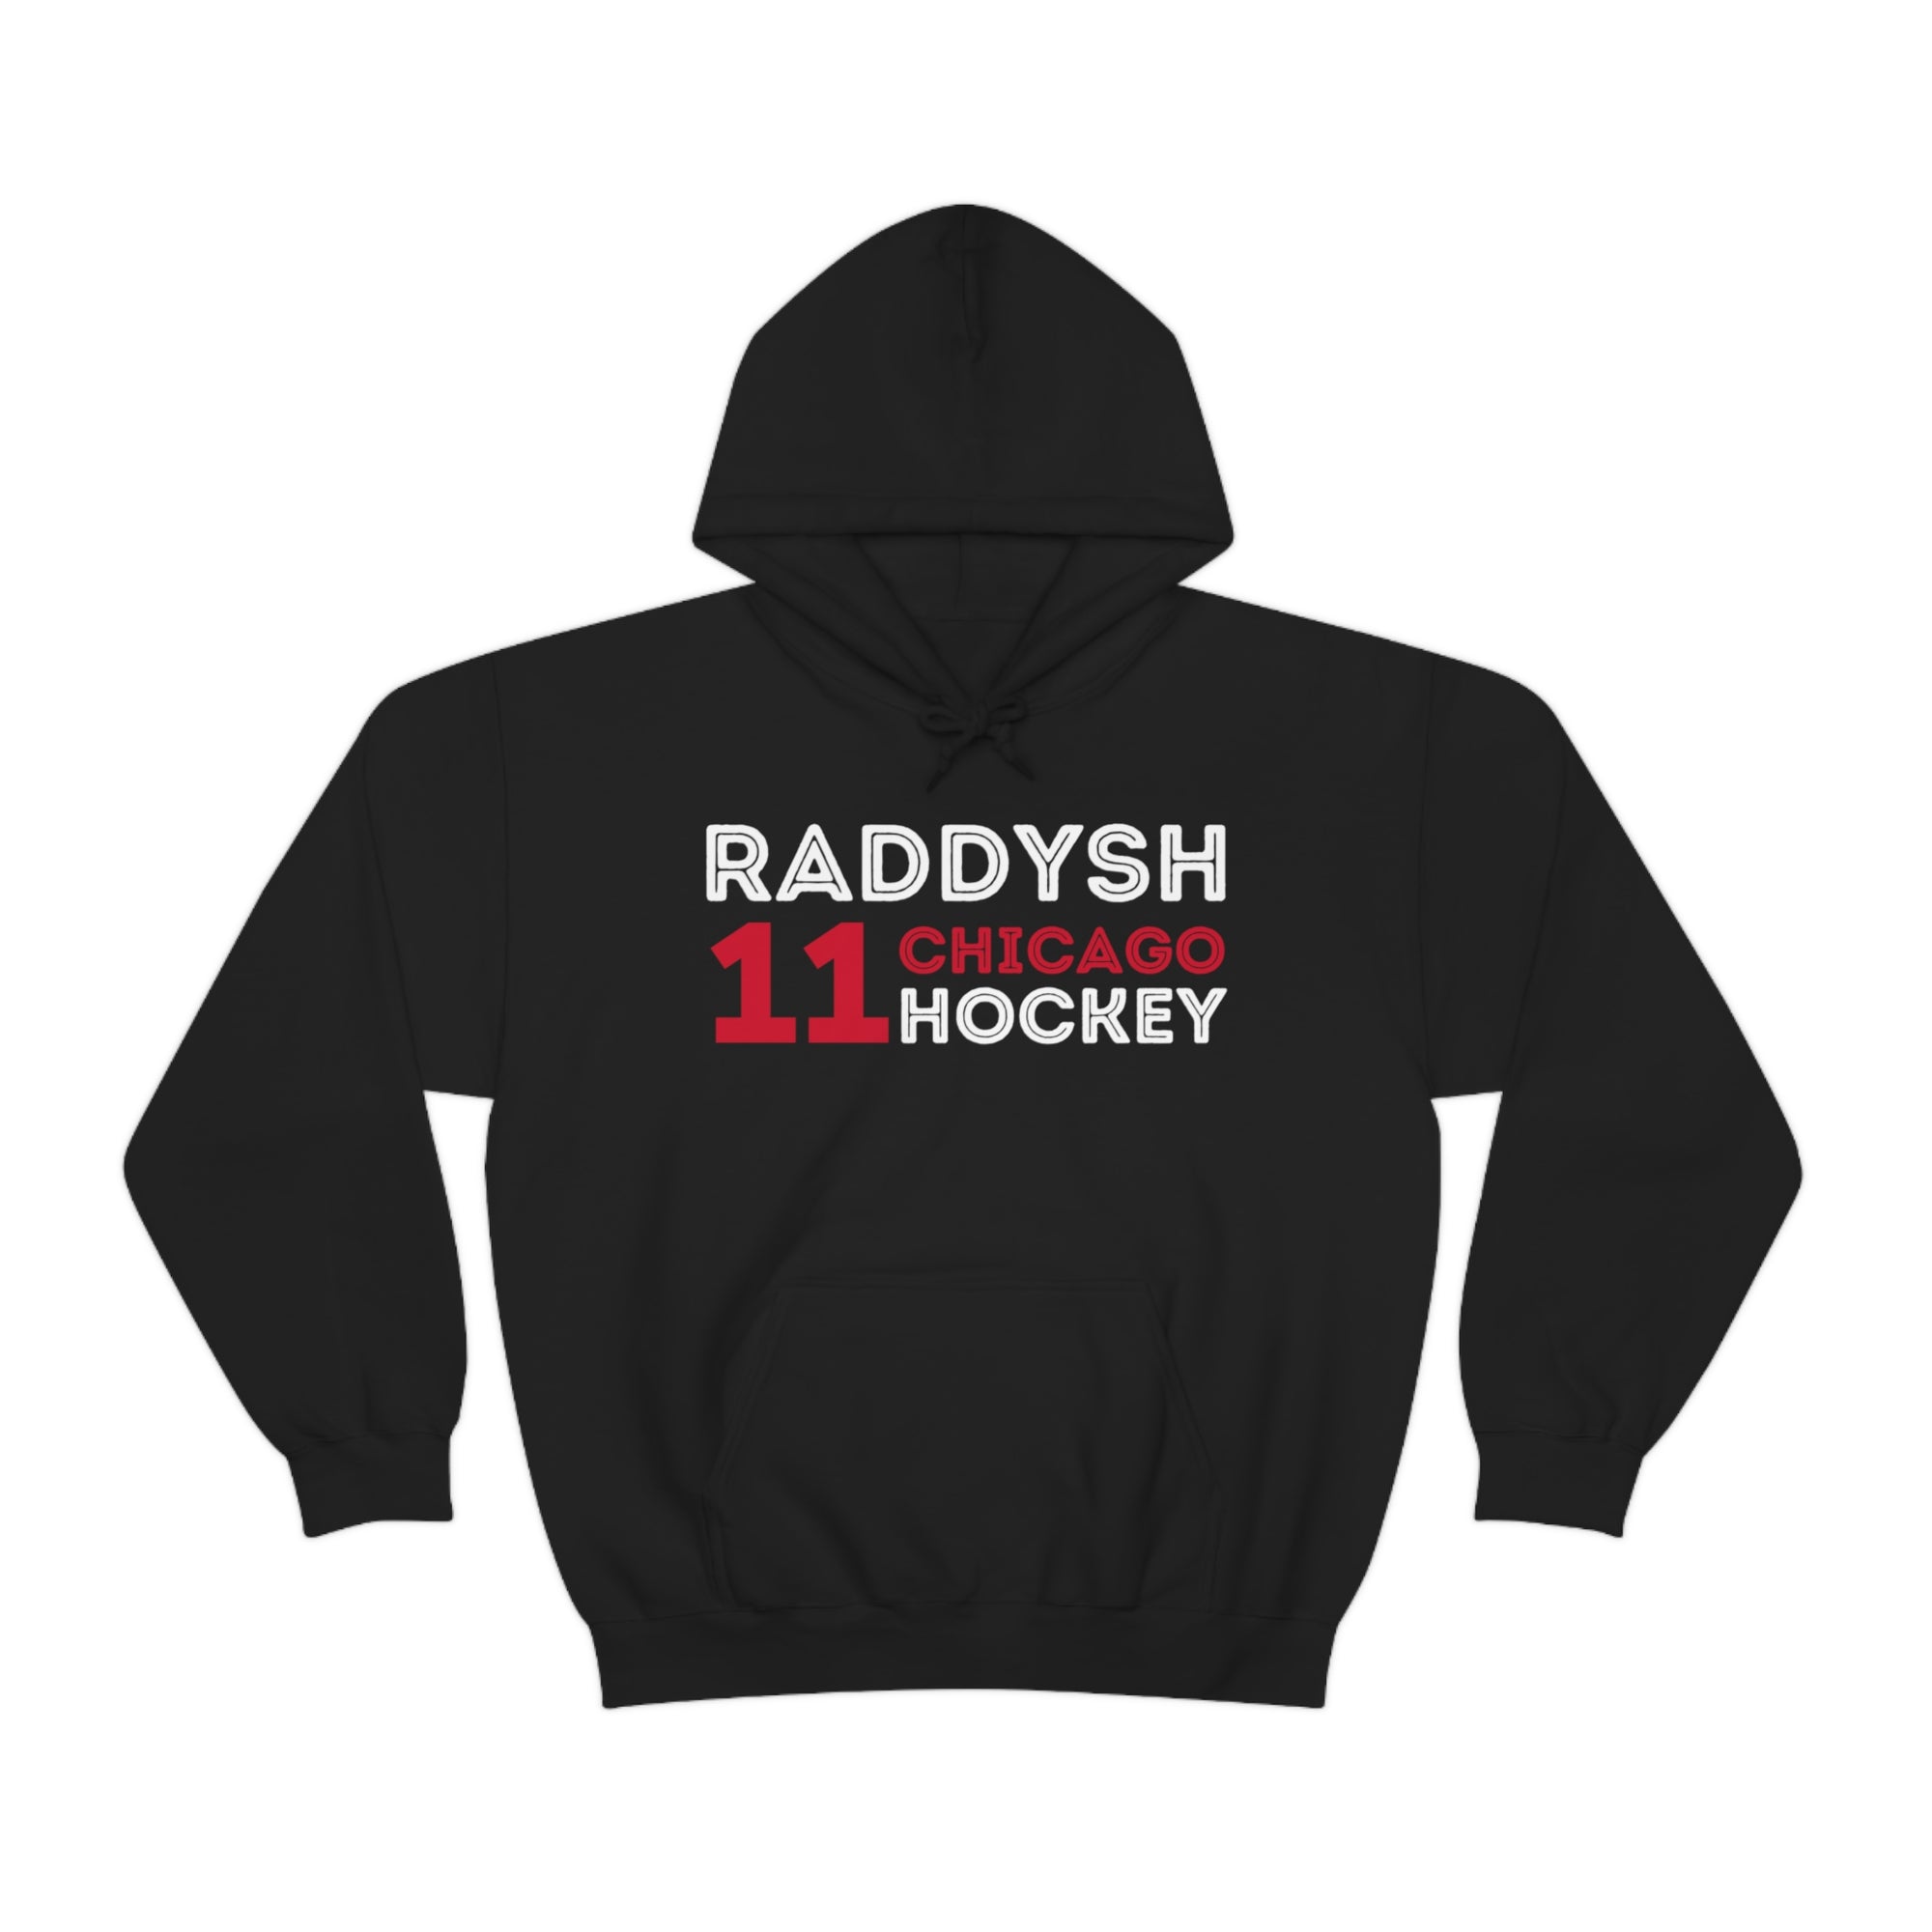 Raddysh 11 Chicago Hockey Grafitti Wall Design Unisex Hooded Sweatshirt